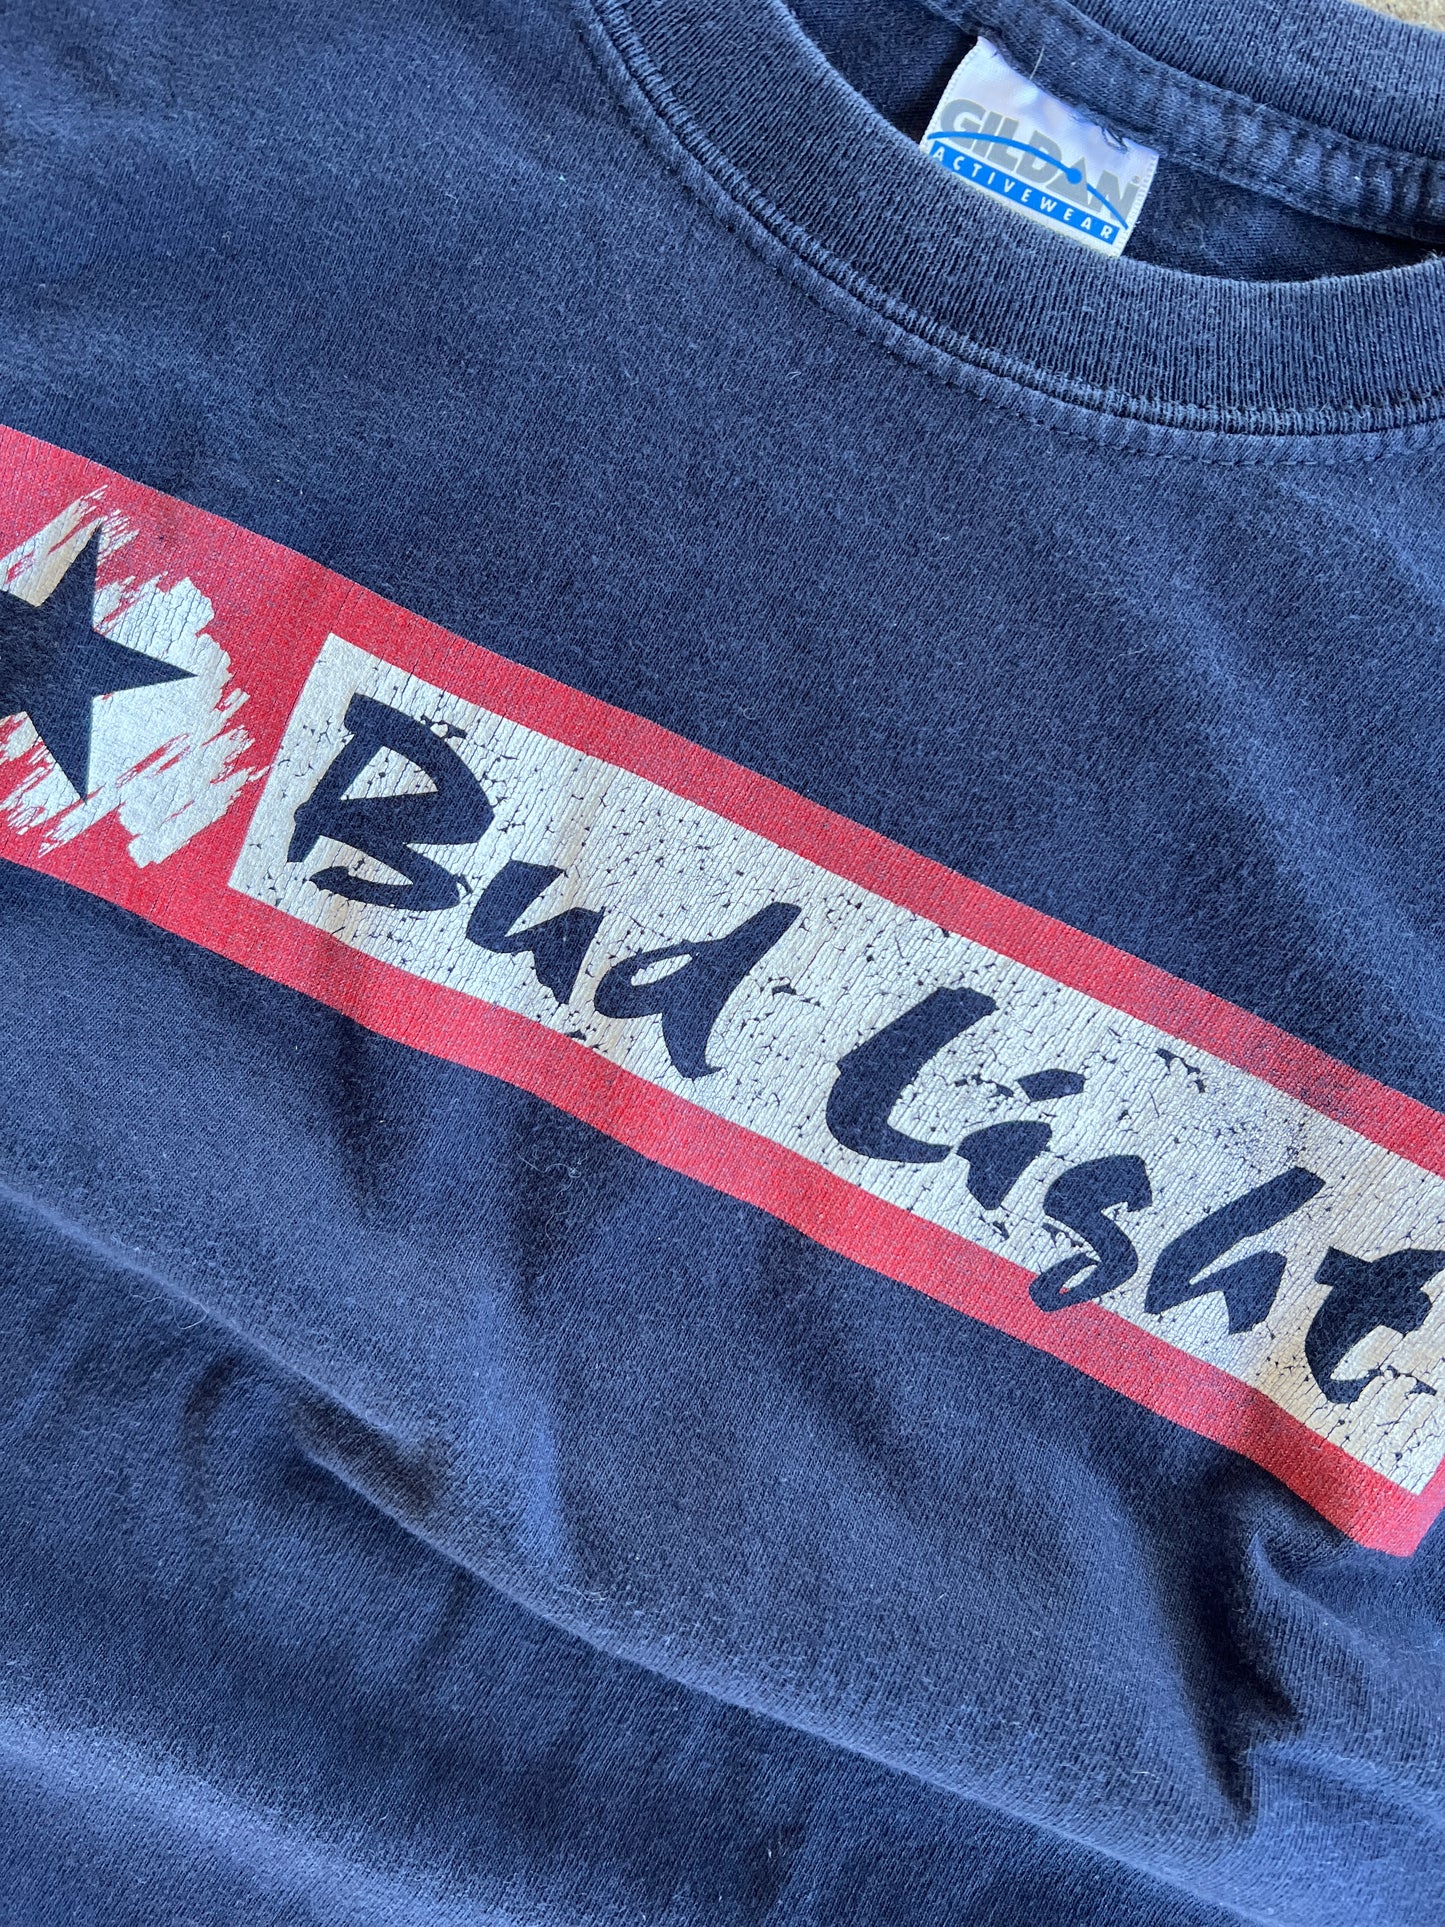 Vintage Bud Light Shirt - XL